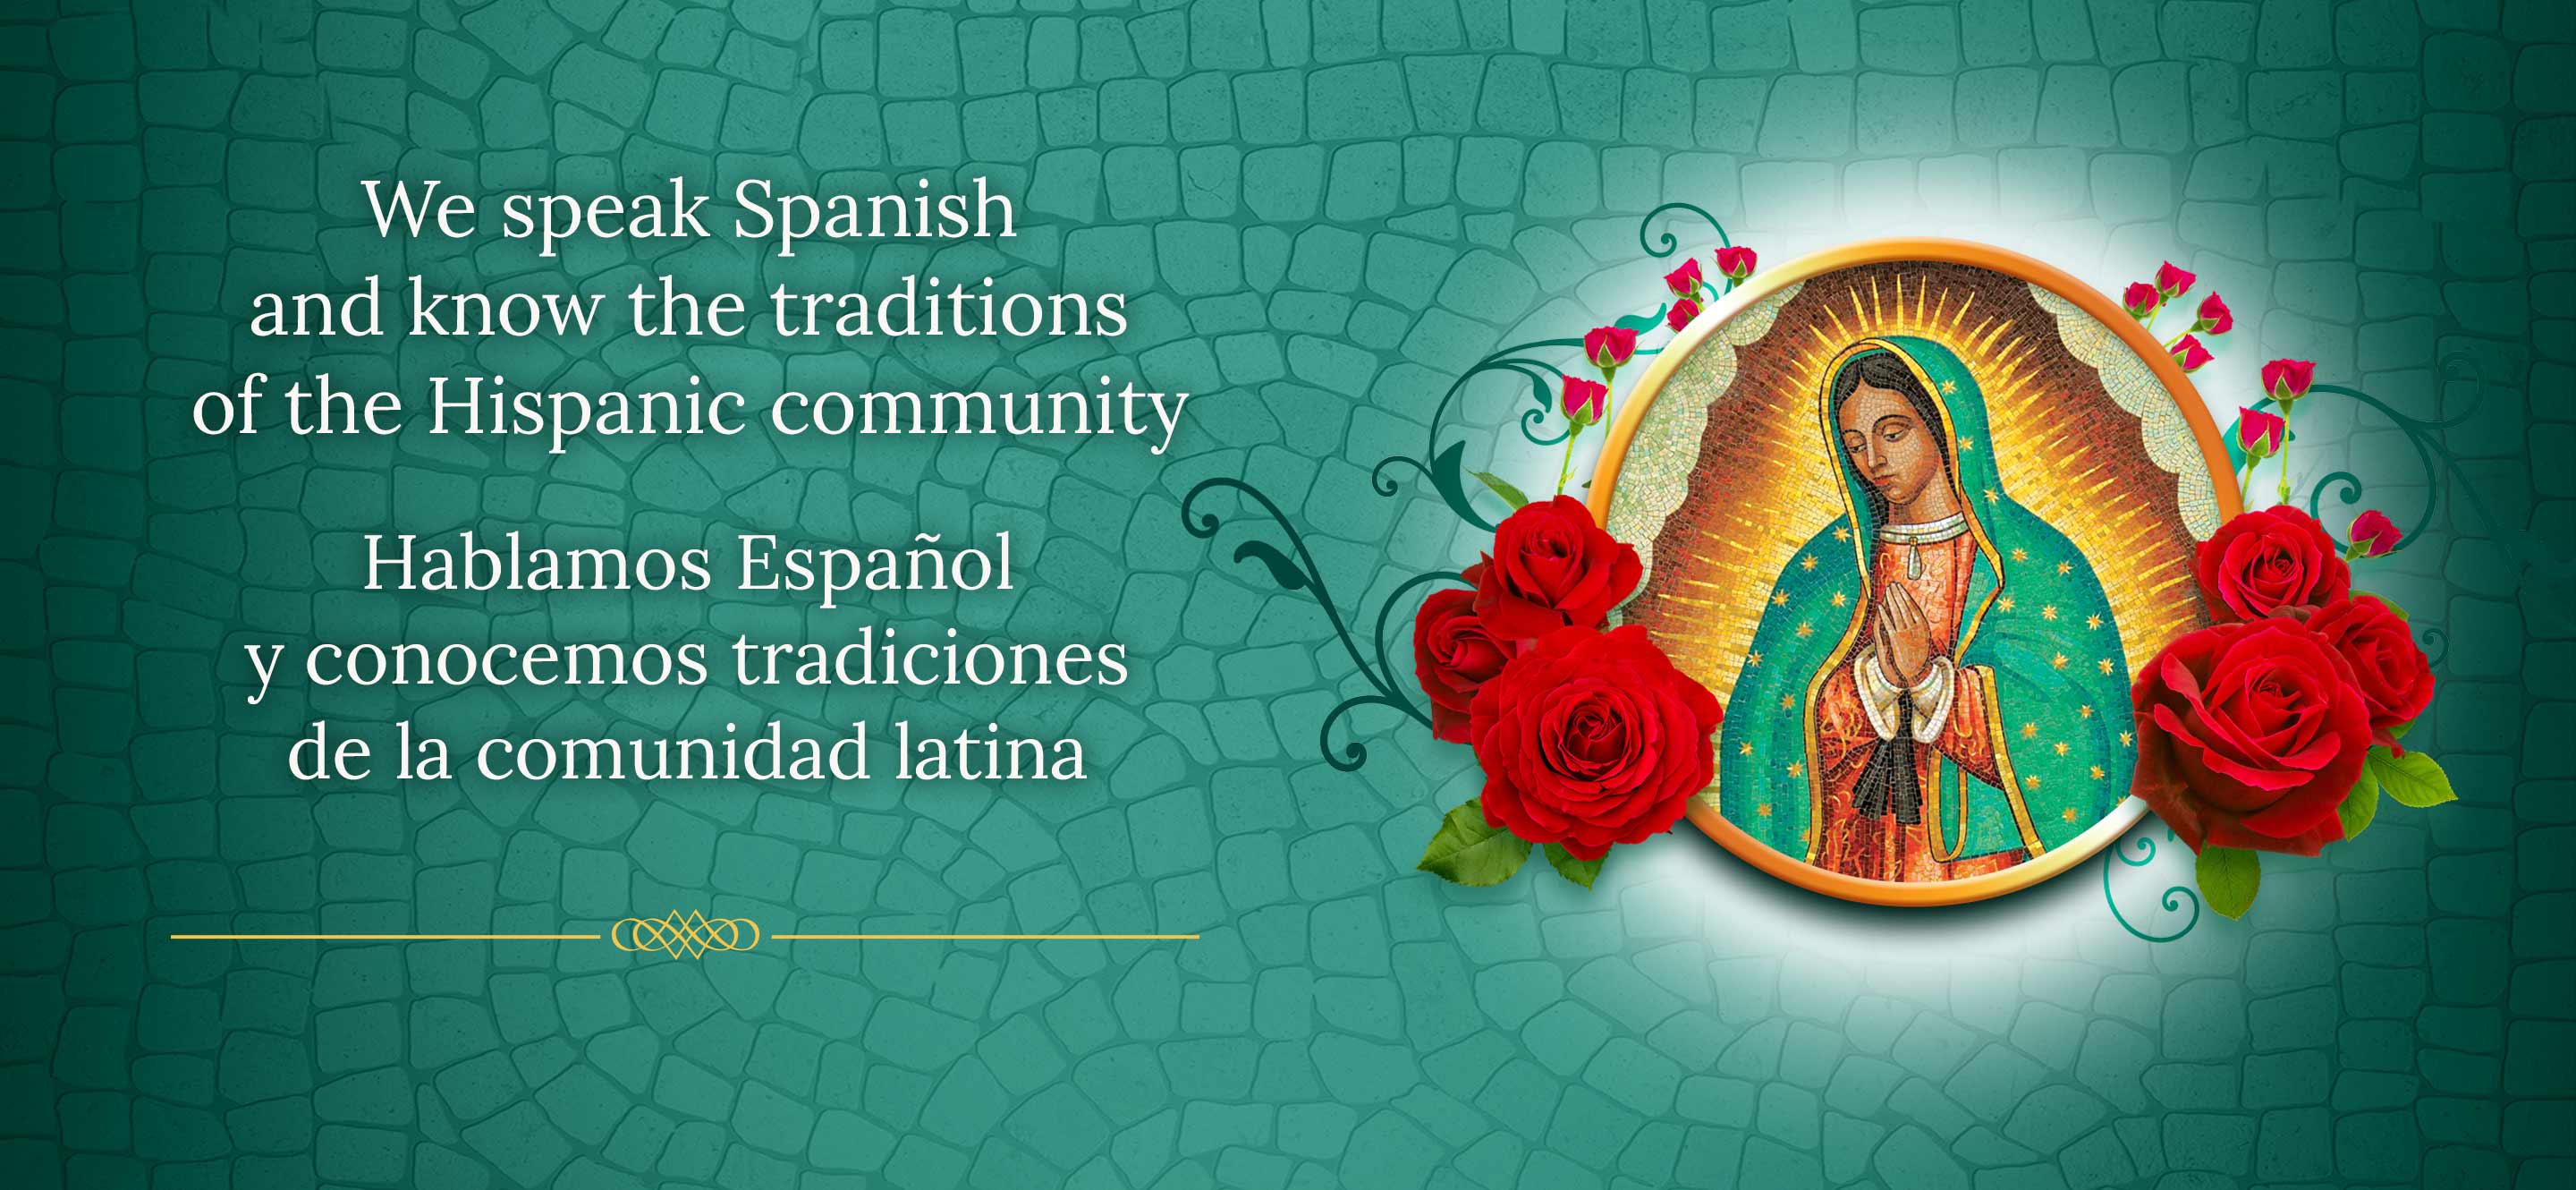 hispanic community